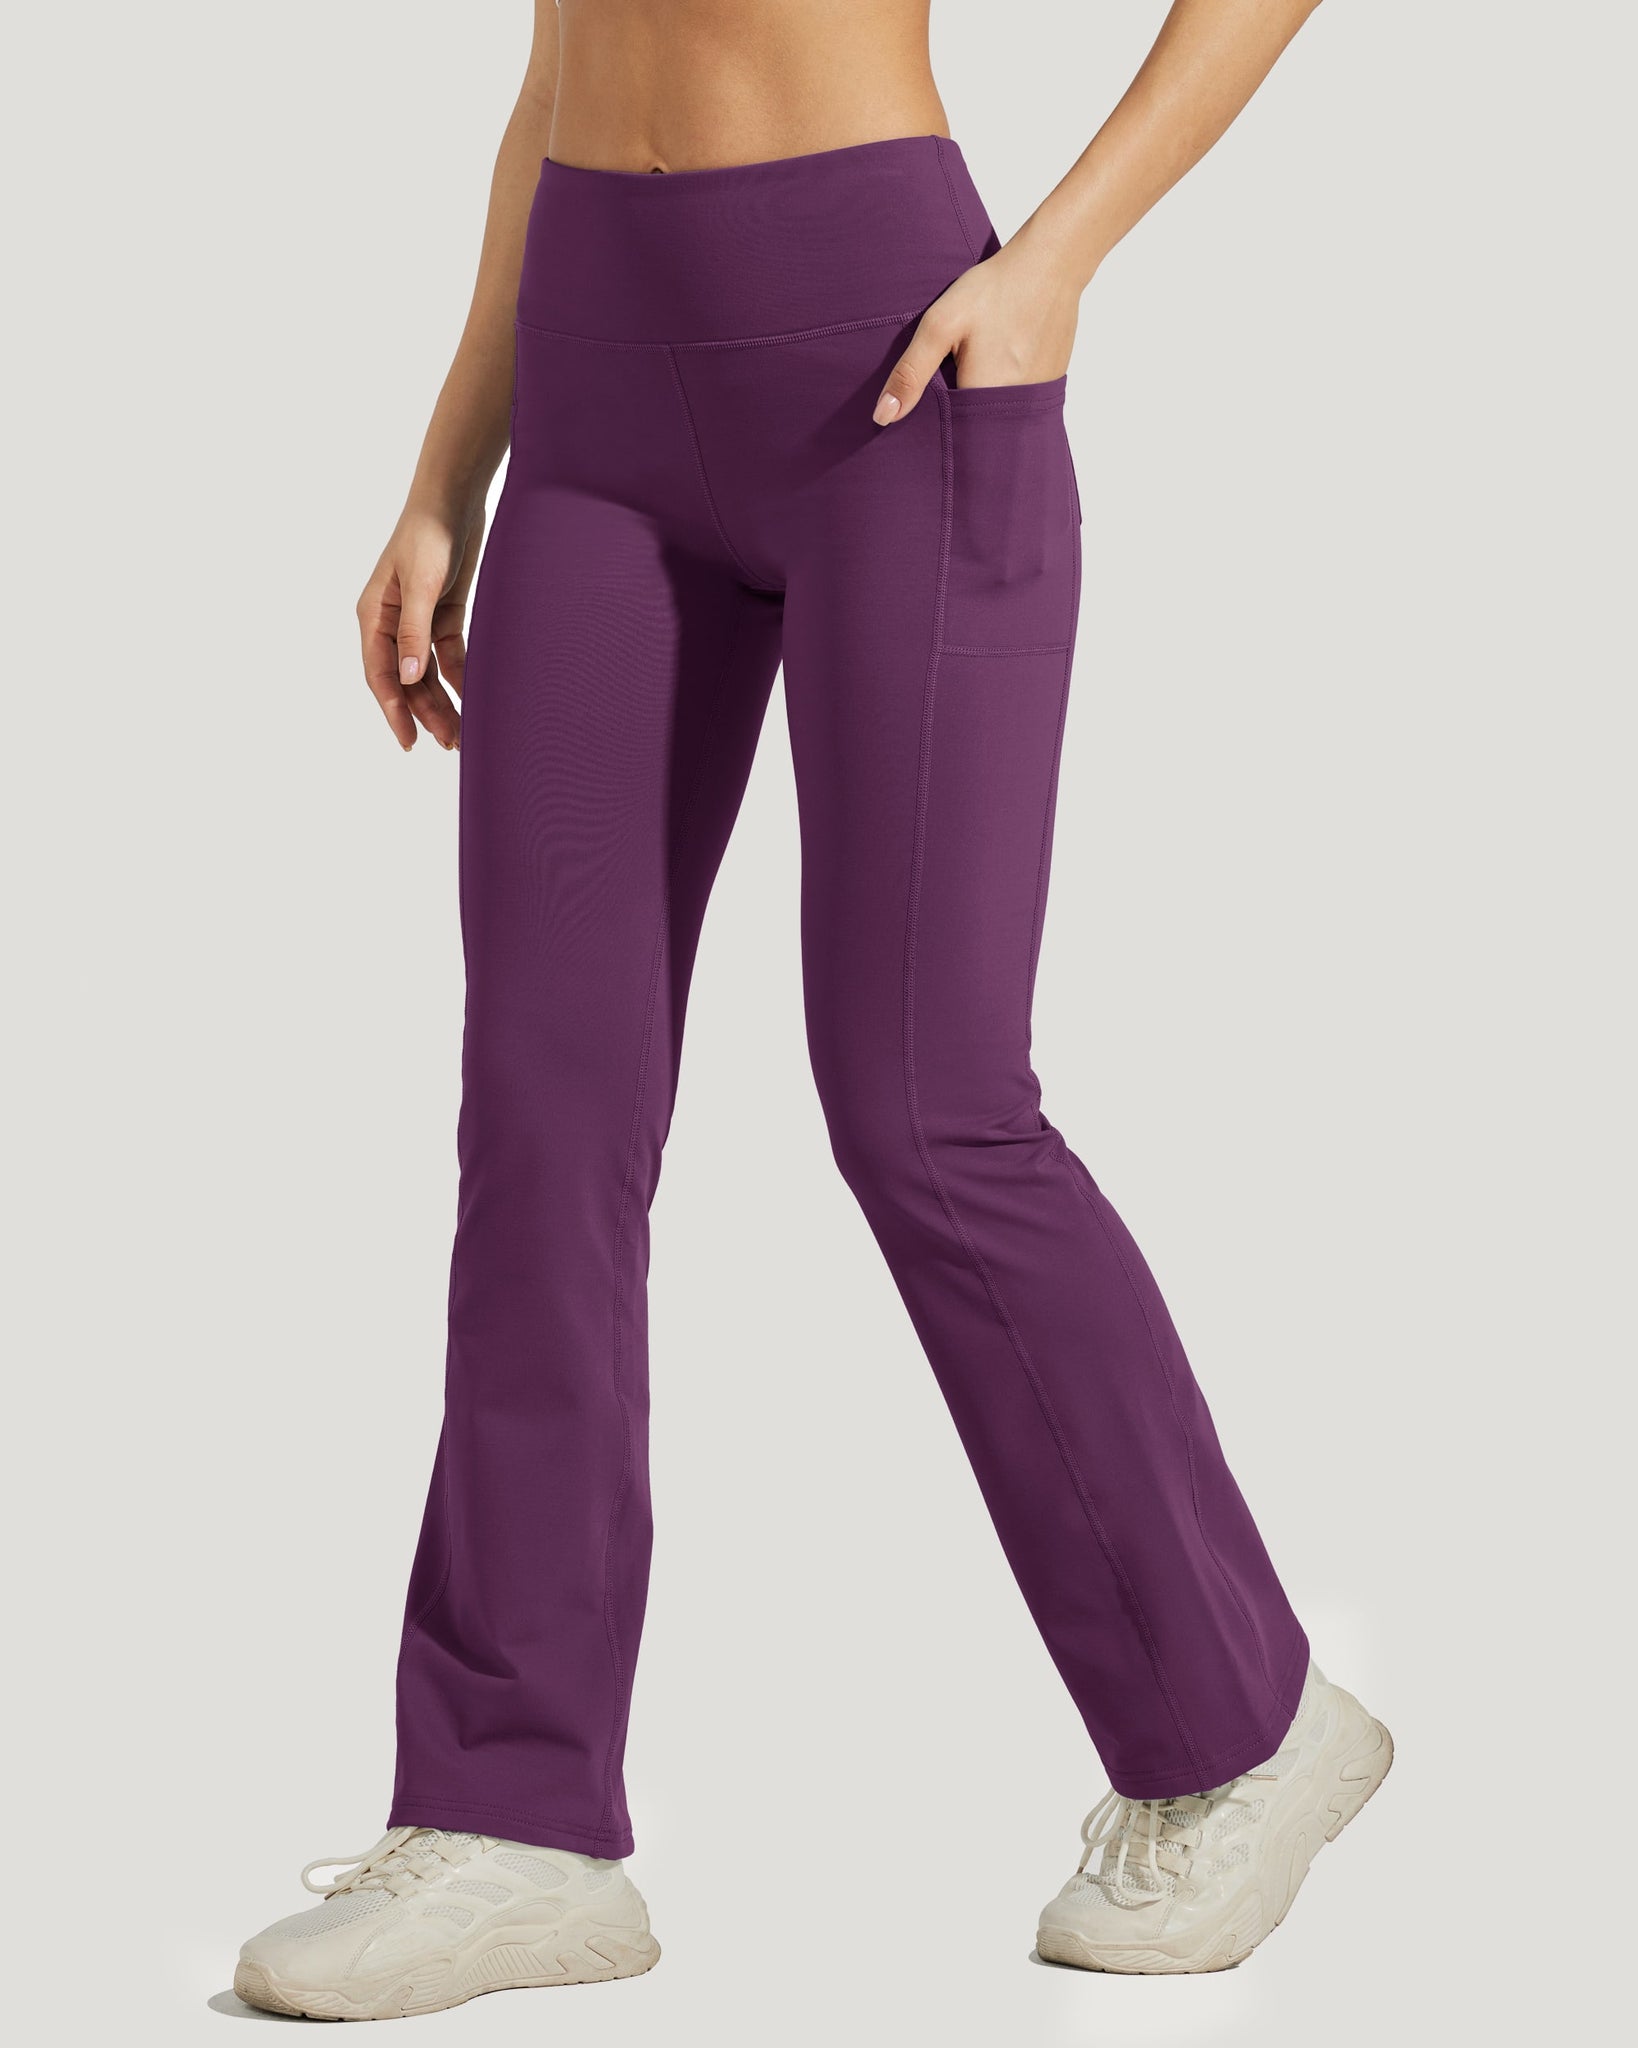 Women's Fleece Lined Bootcut Yoga Pants_Purple_model3